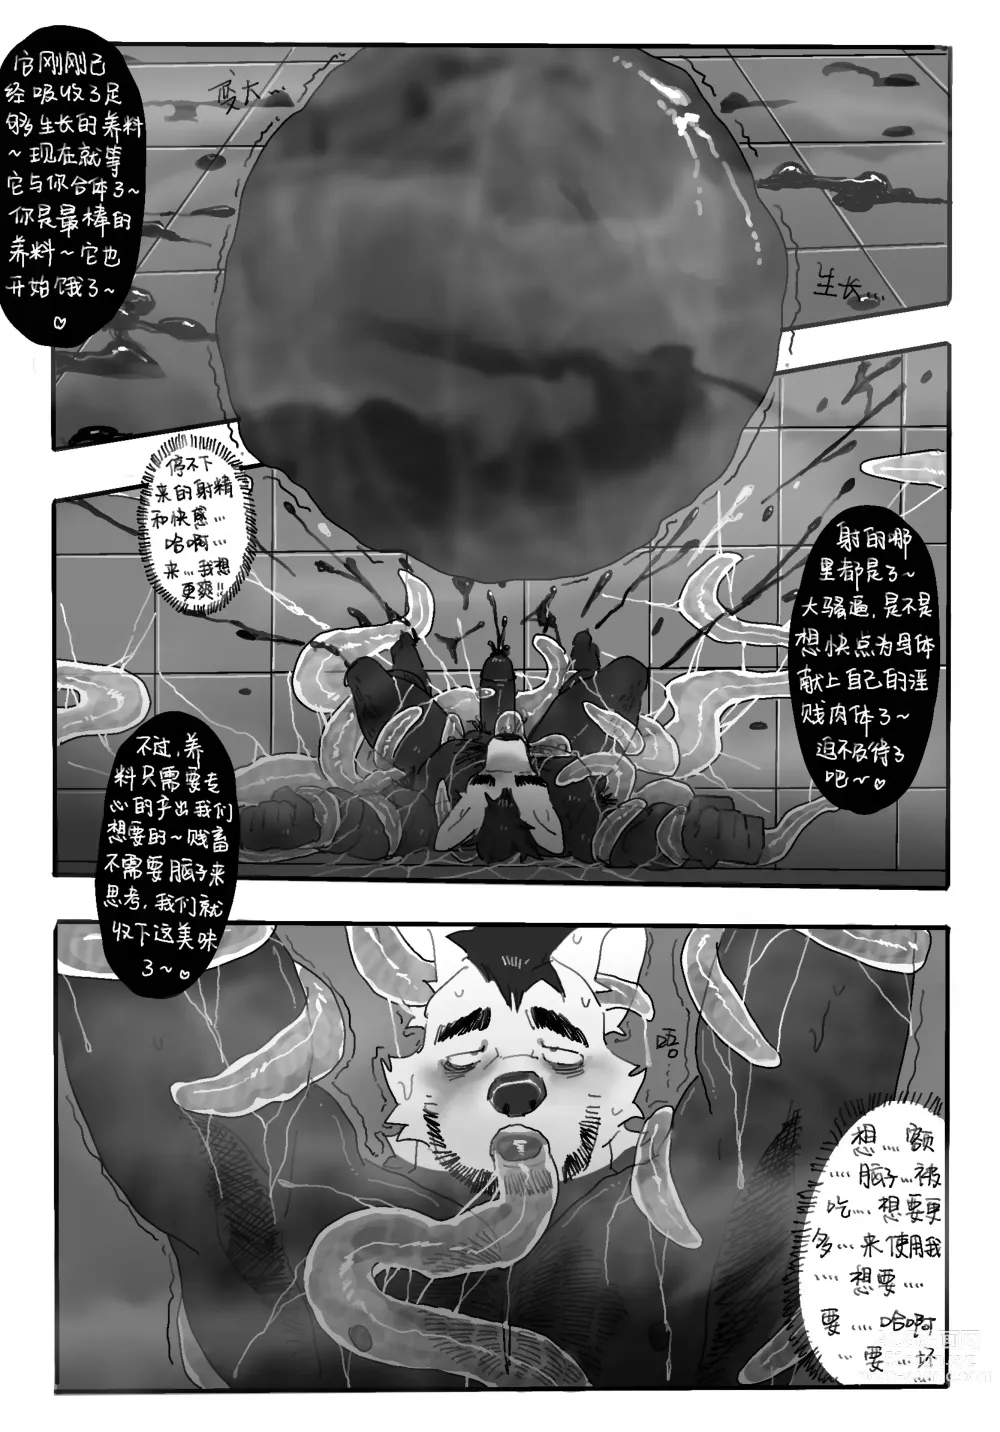 Page 19 of doujinshi No Title